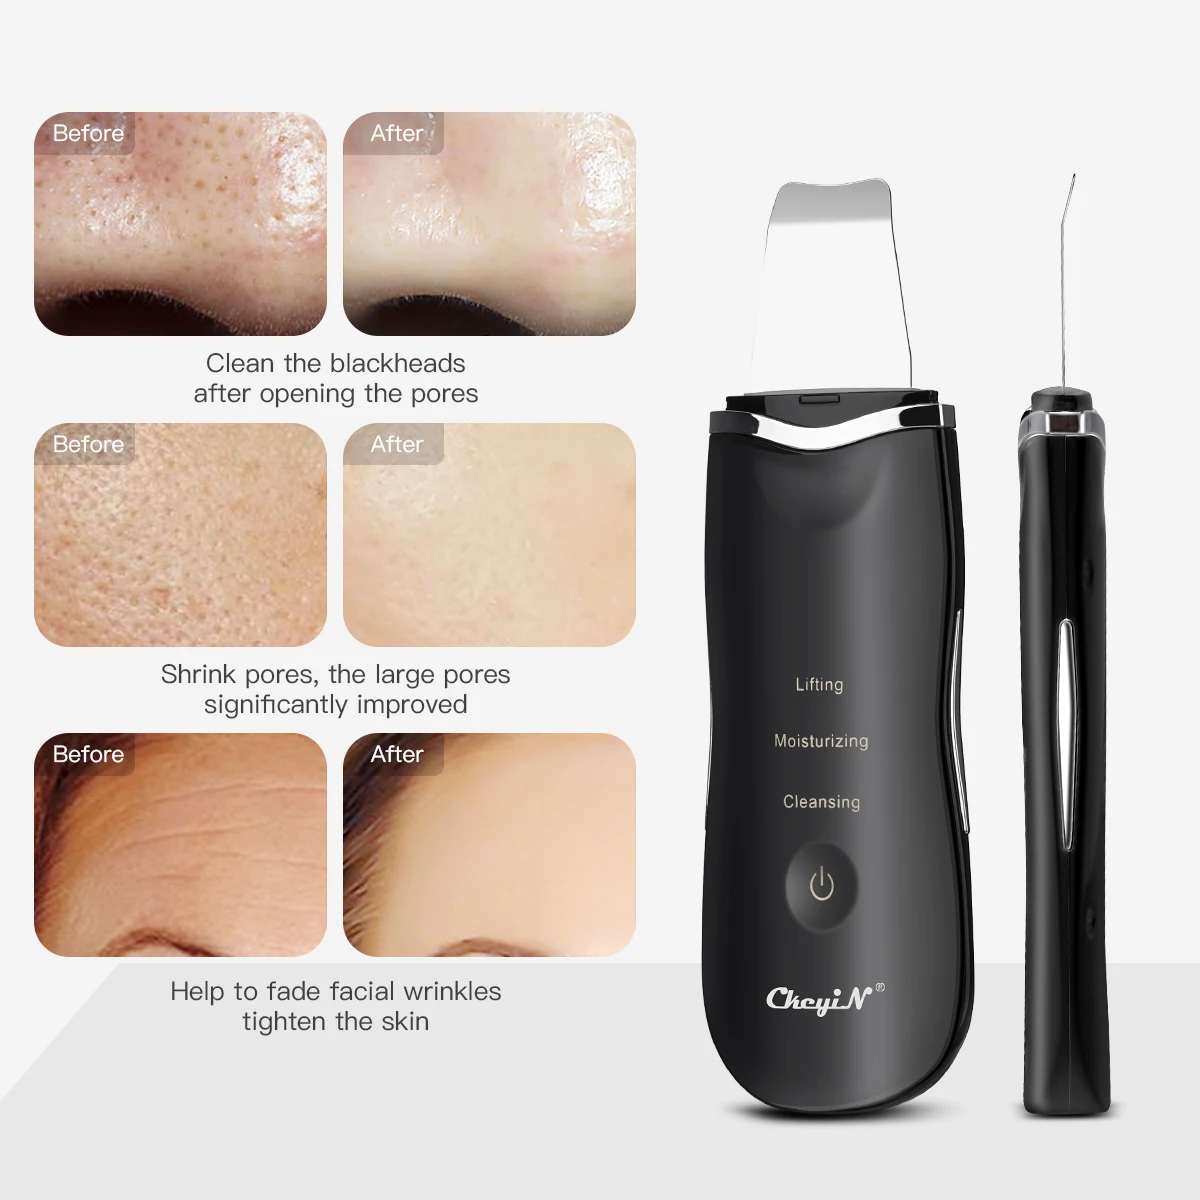 Ultrasonic Skin Scrubber/RF EMS LED Beauty Device/Mini Nano Mister Deep Face Cleaner